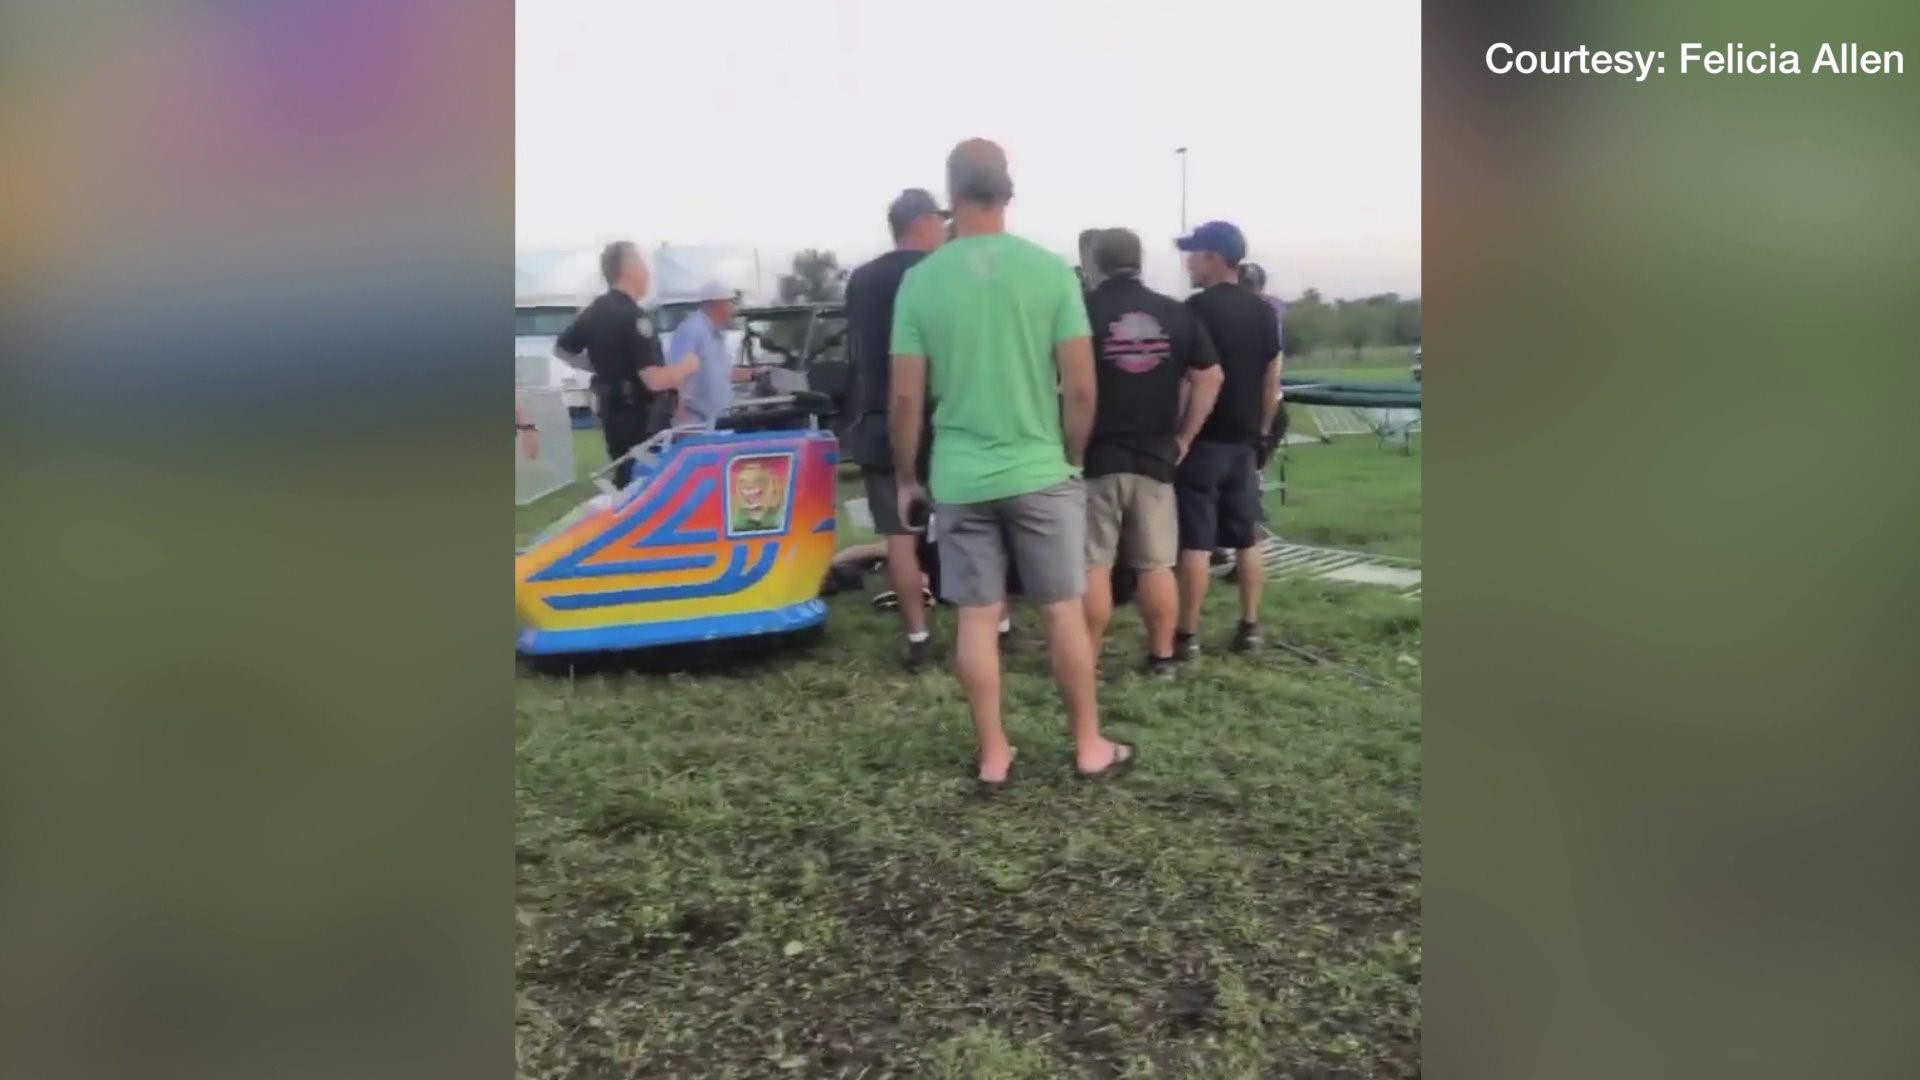 Two Injured On Benton County Fair Ride